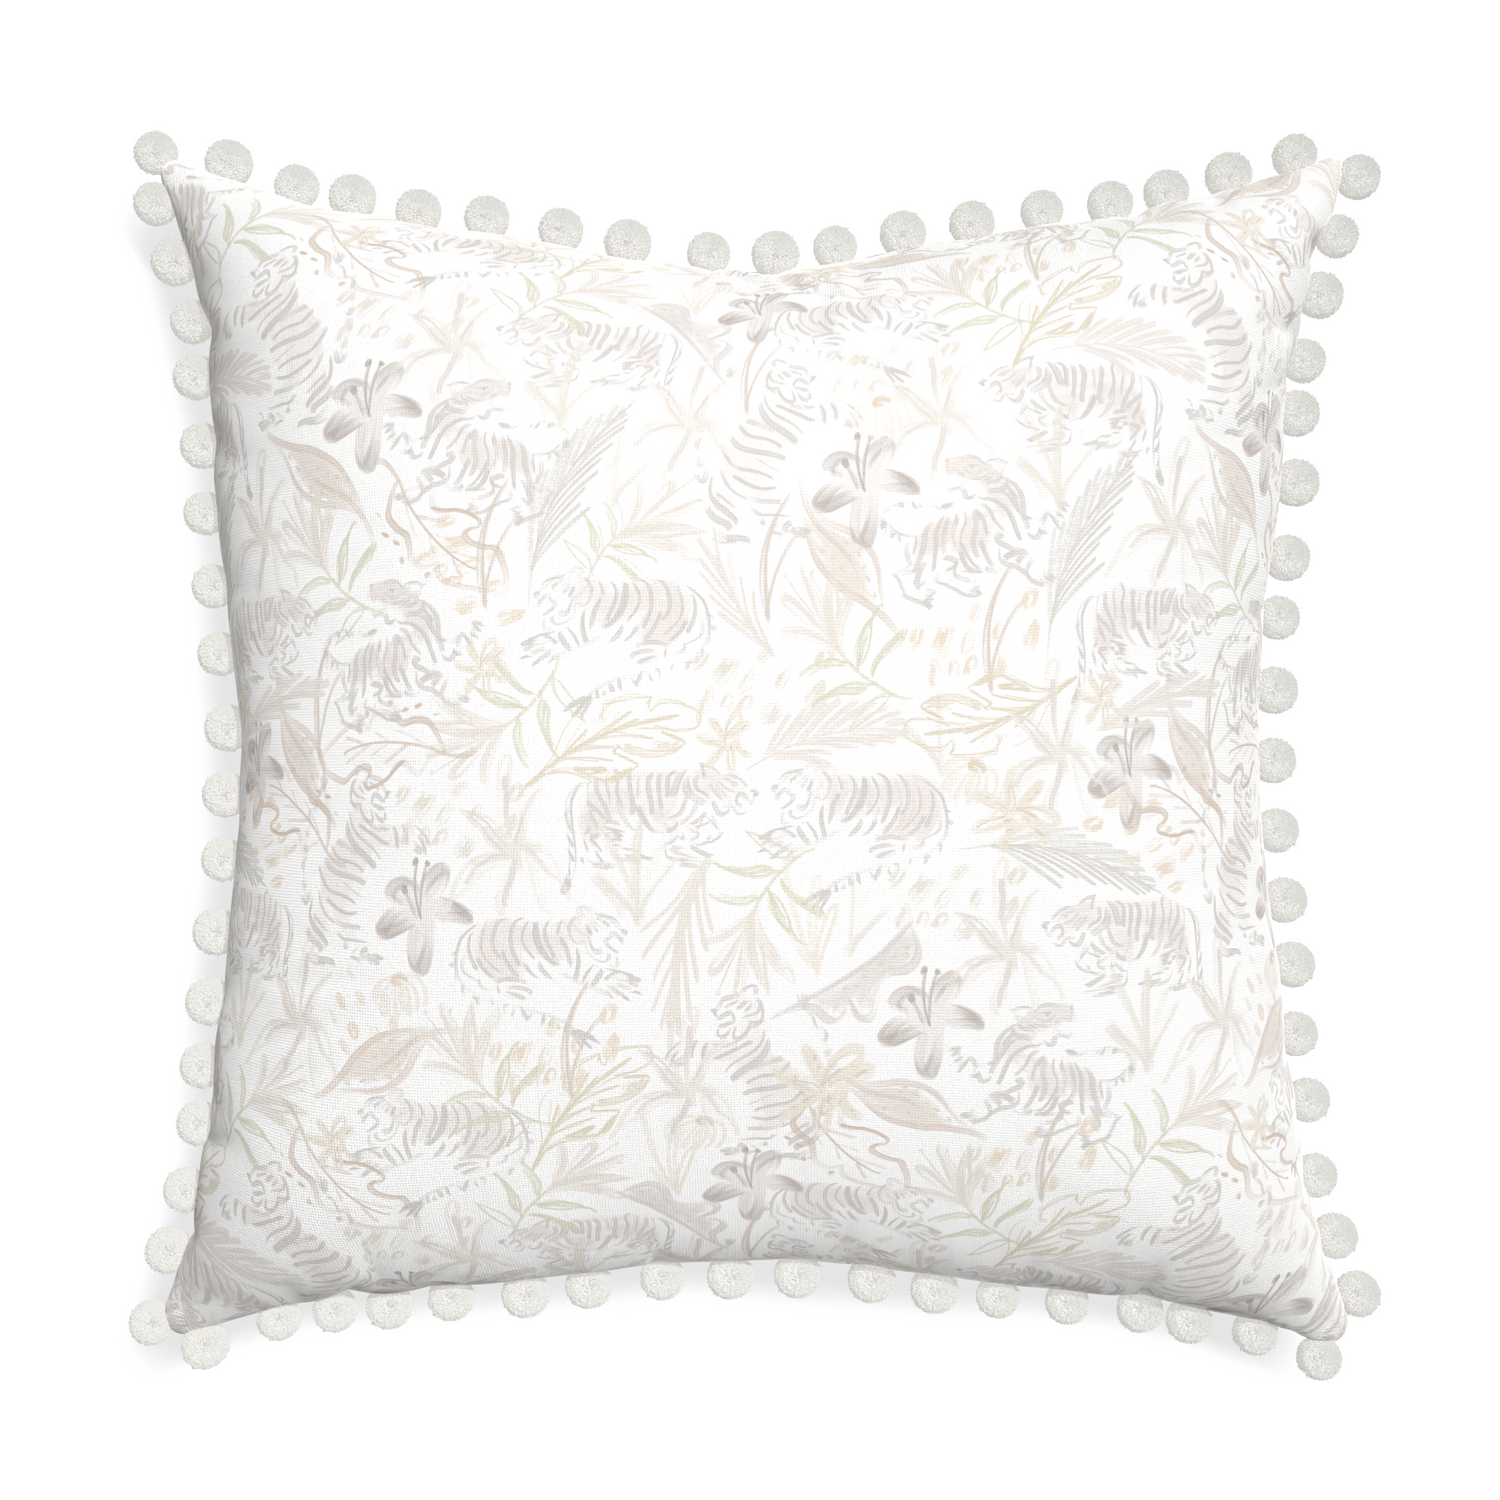 Euro-sham frida sand custom pillow with snow pom pom on white background